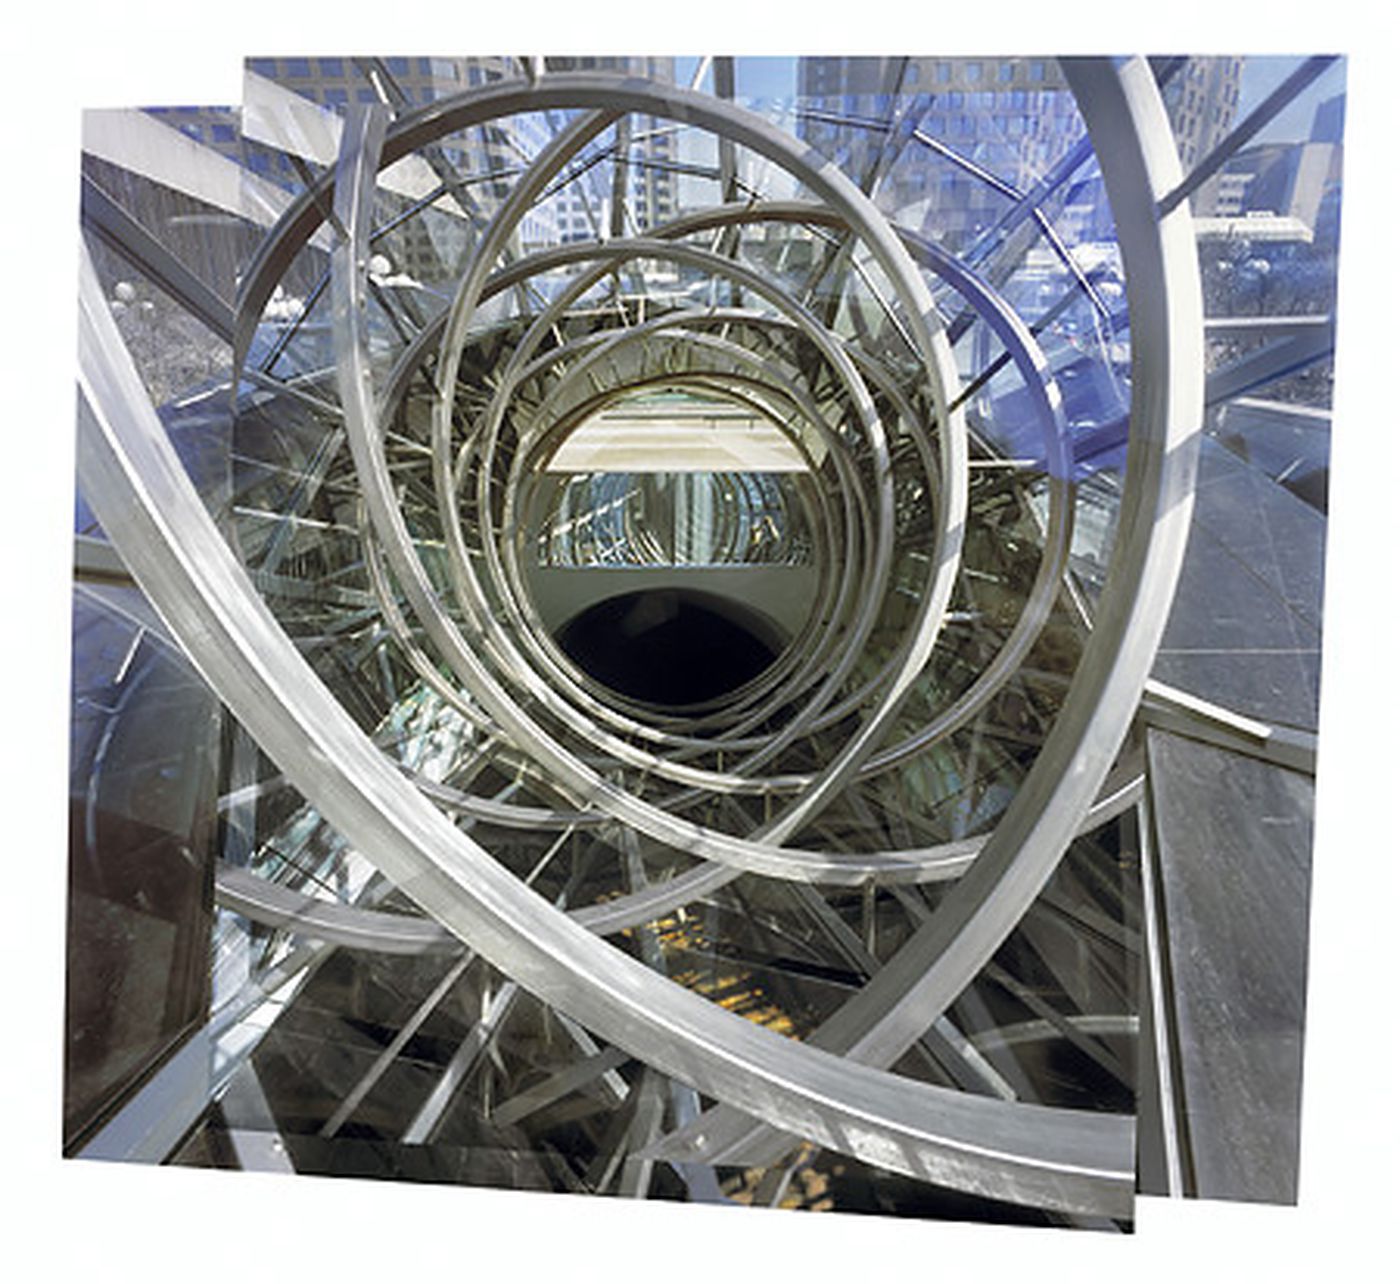 Photomontage showing interior views of a spiral structure at the Place des Arts, Montréal, Québec